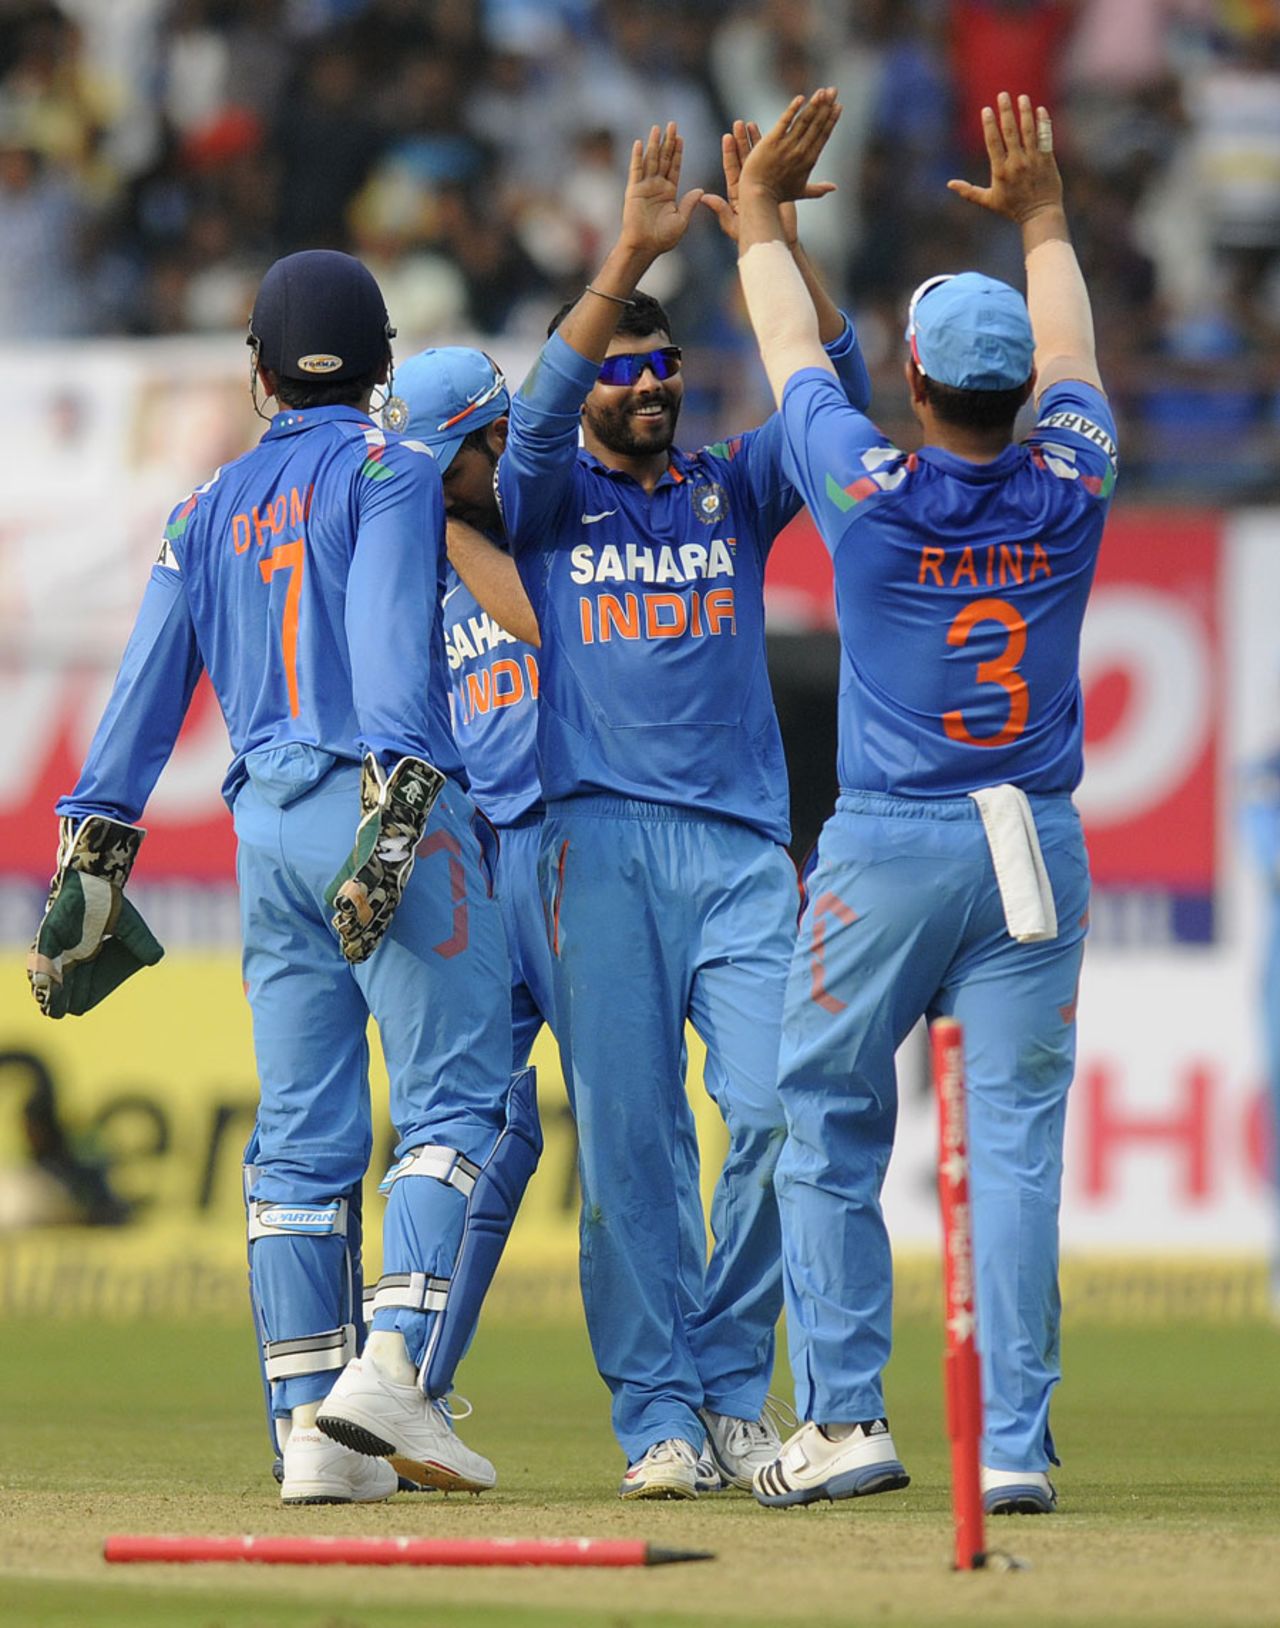 Ravindra Jadeja finished with 3 for 37, India v West Indies, 1st ODI, Kochi, November 21, 2013